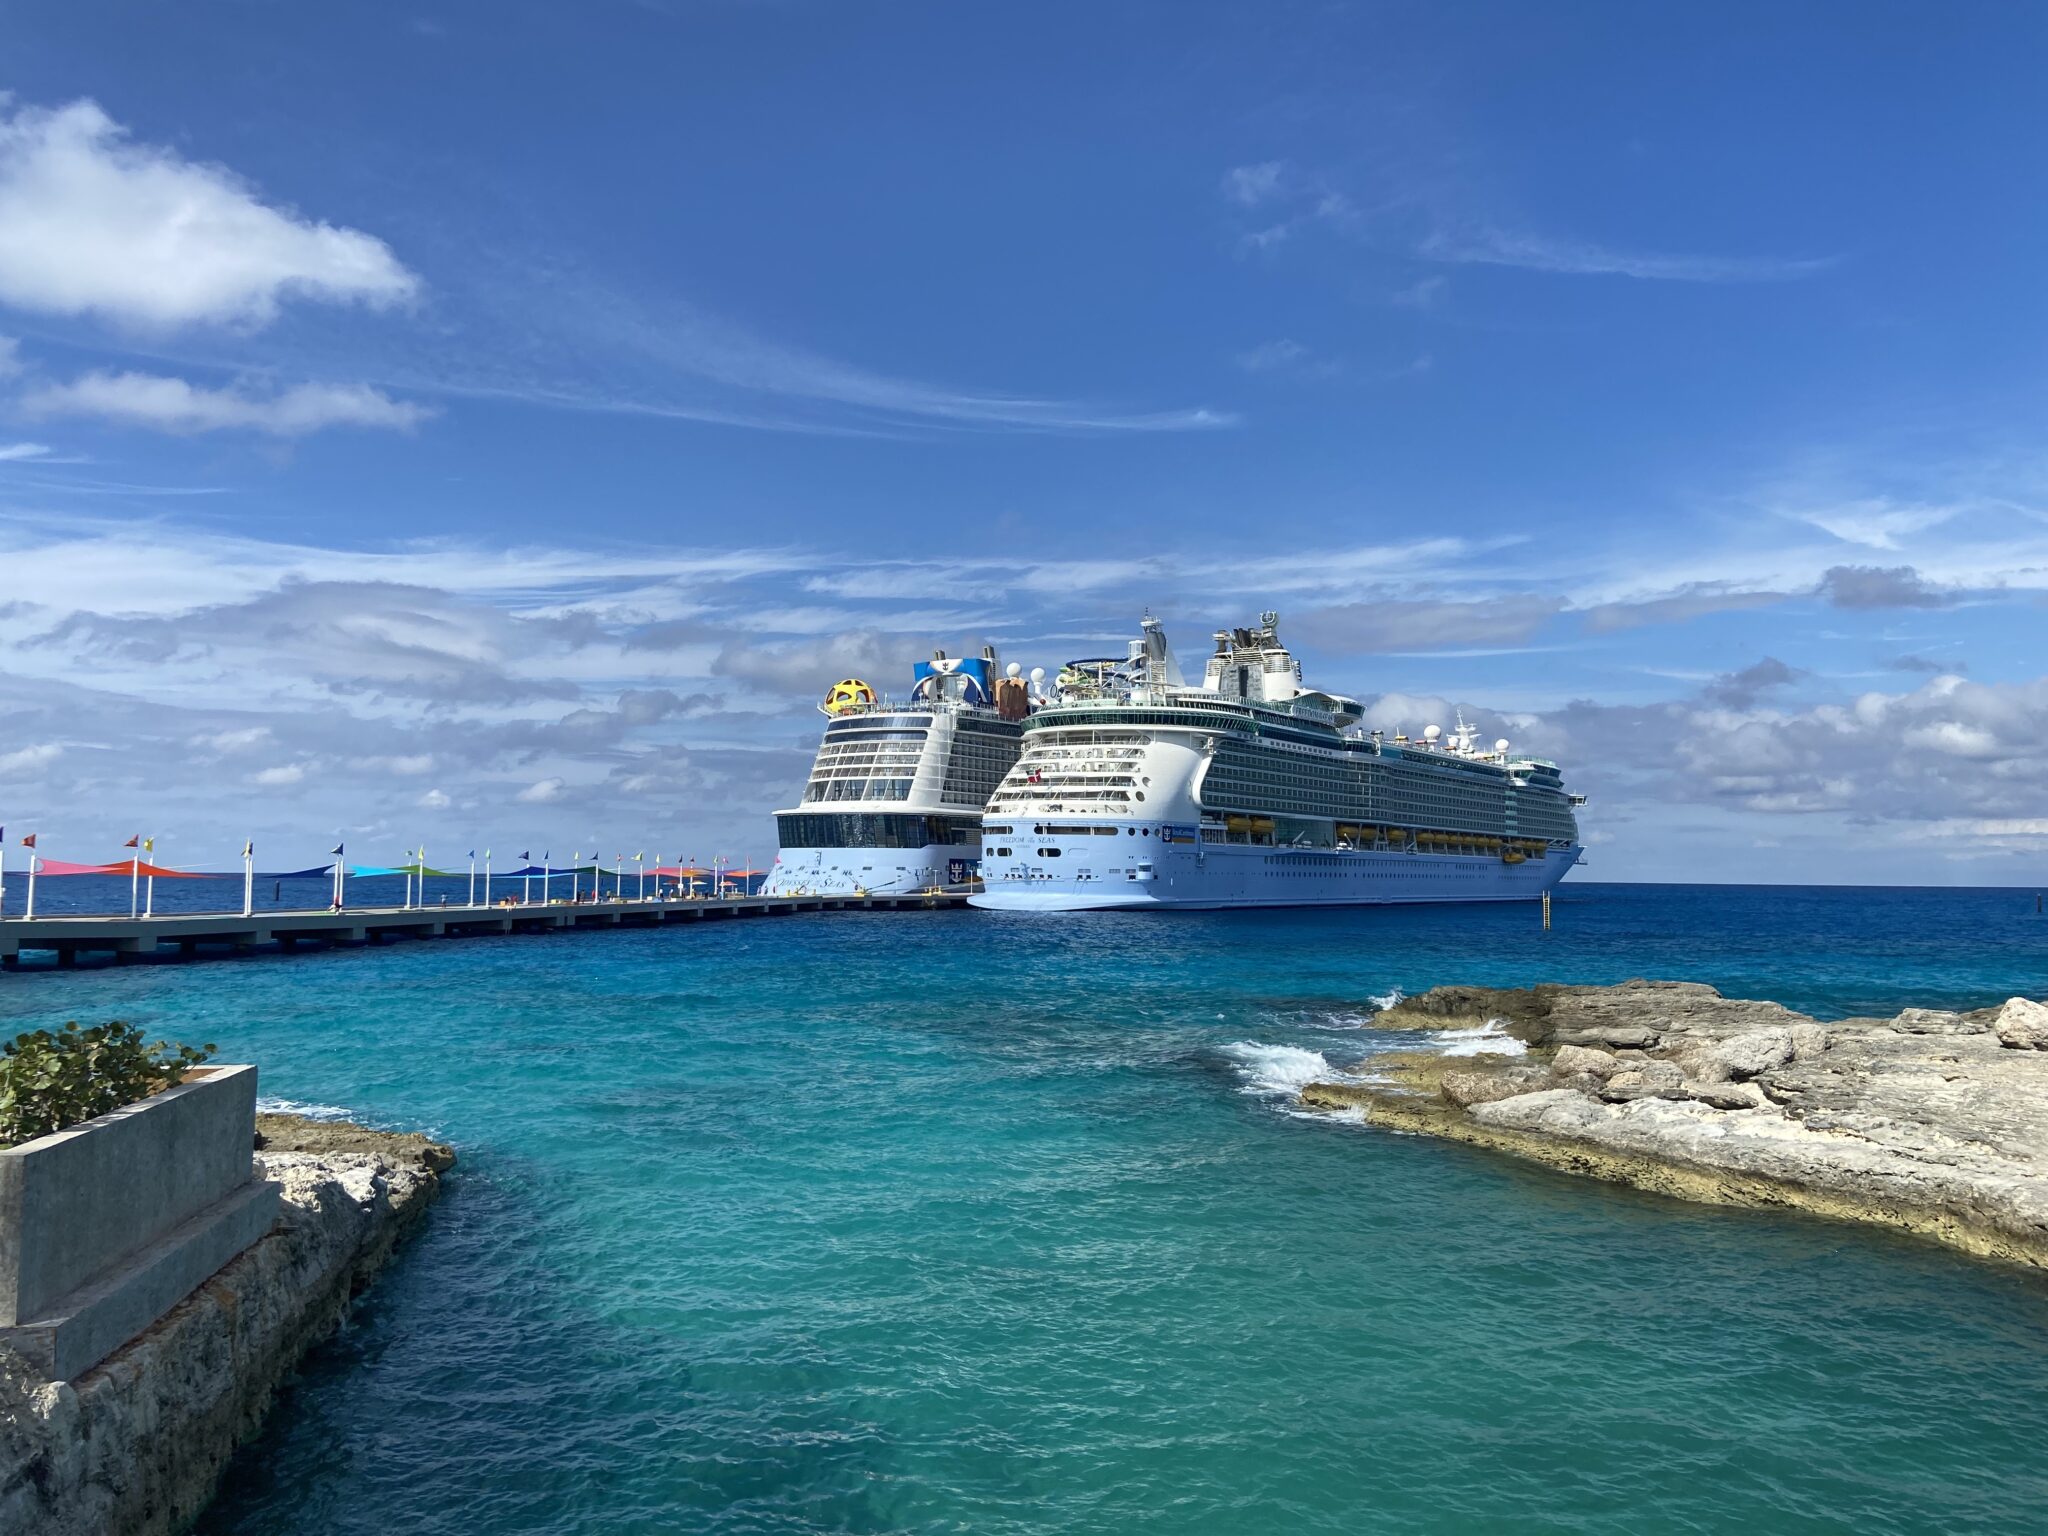 Royal Caribbean cruise ships at their private island